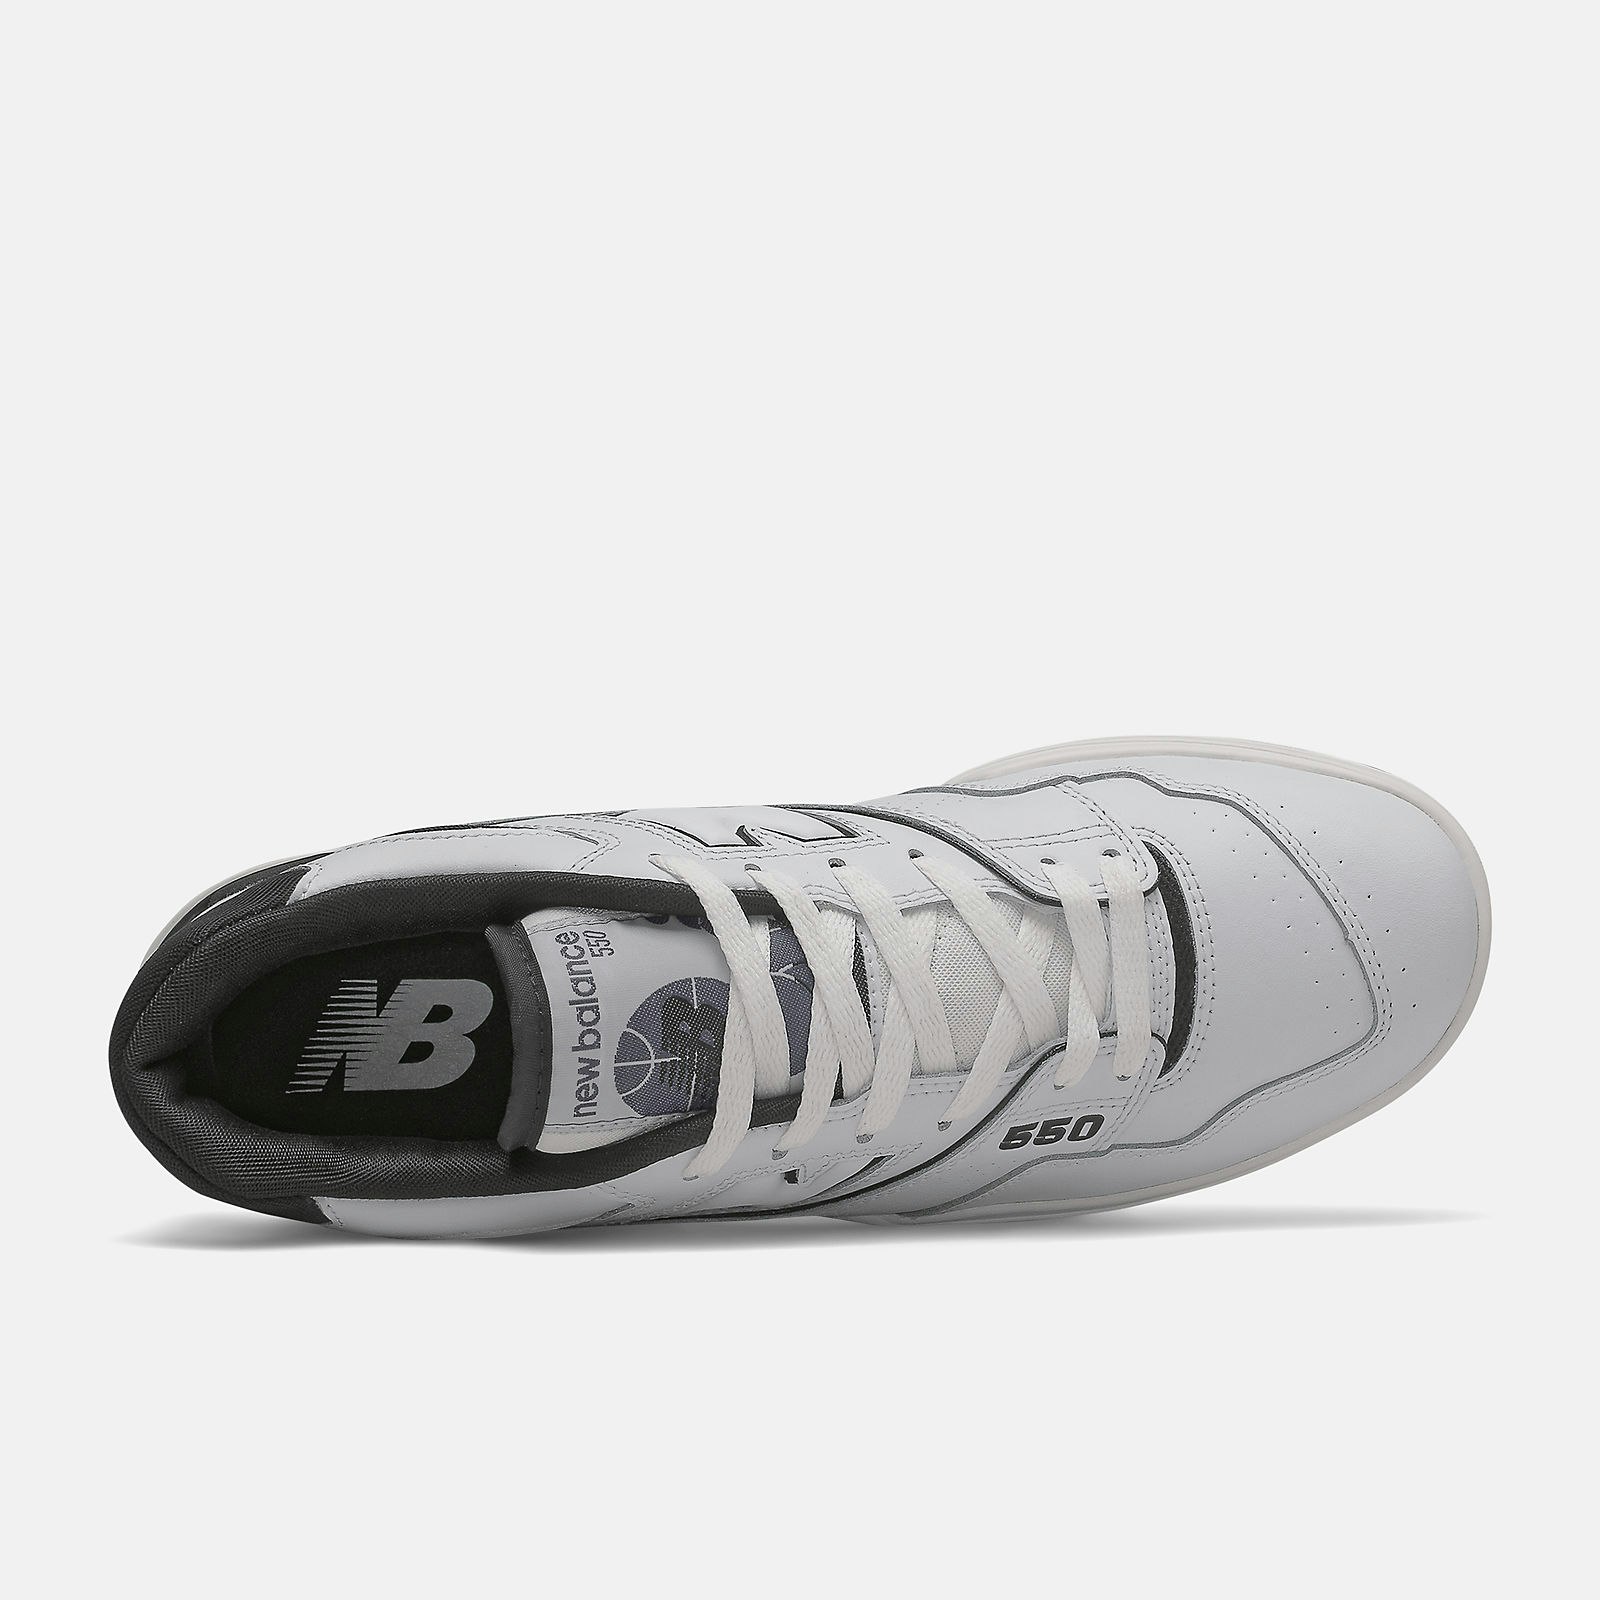 New Balance 550 "Black&White"